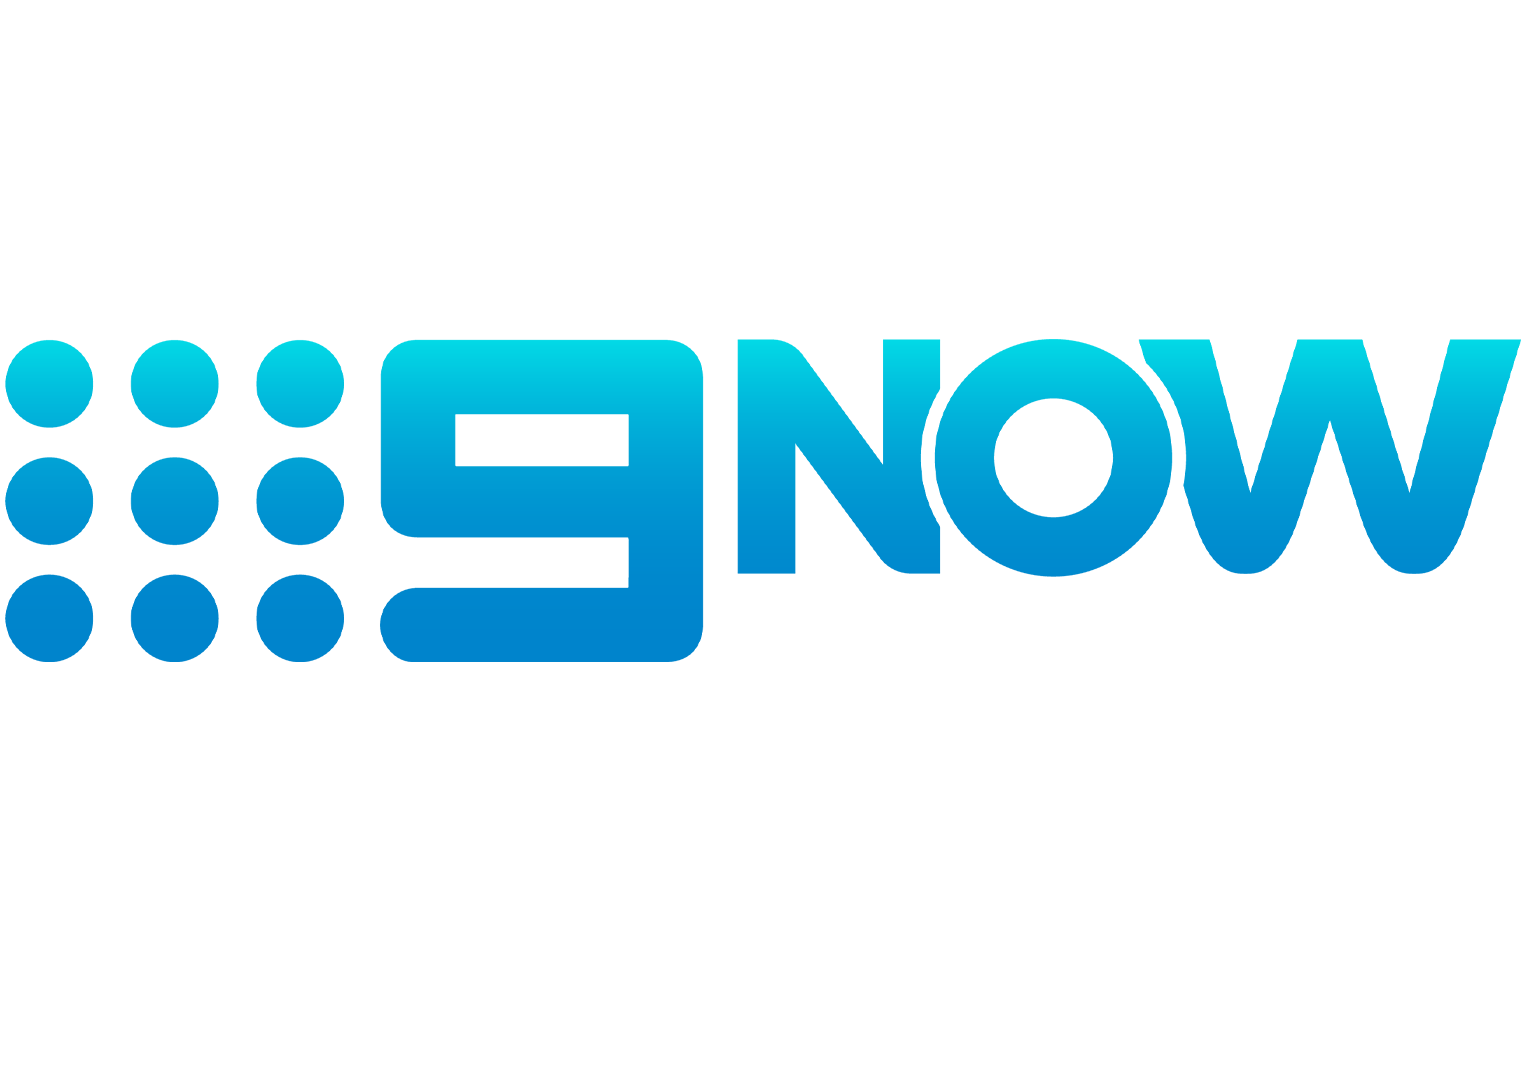 9NOW_Logo_Blue_RGB_Flat